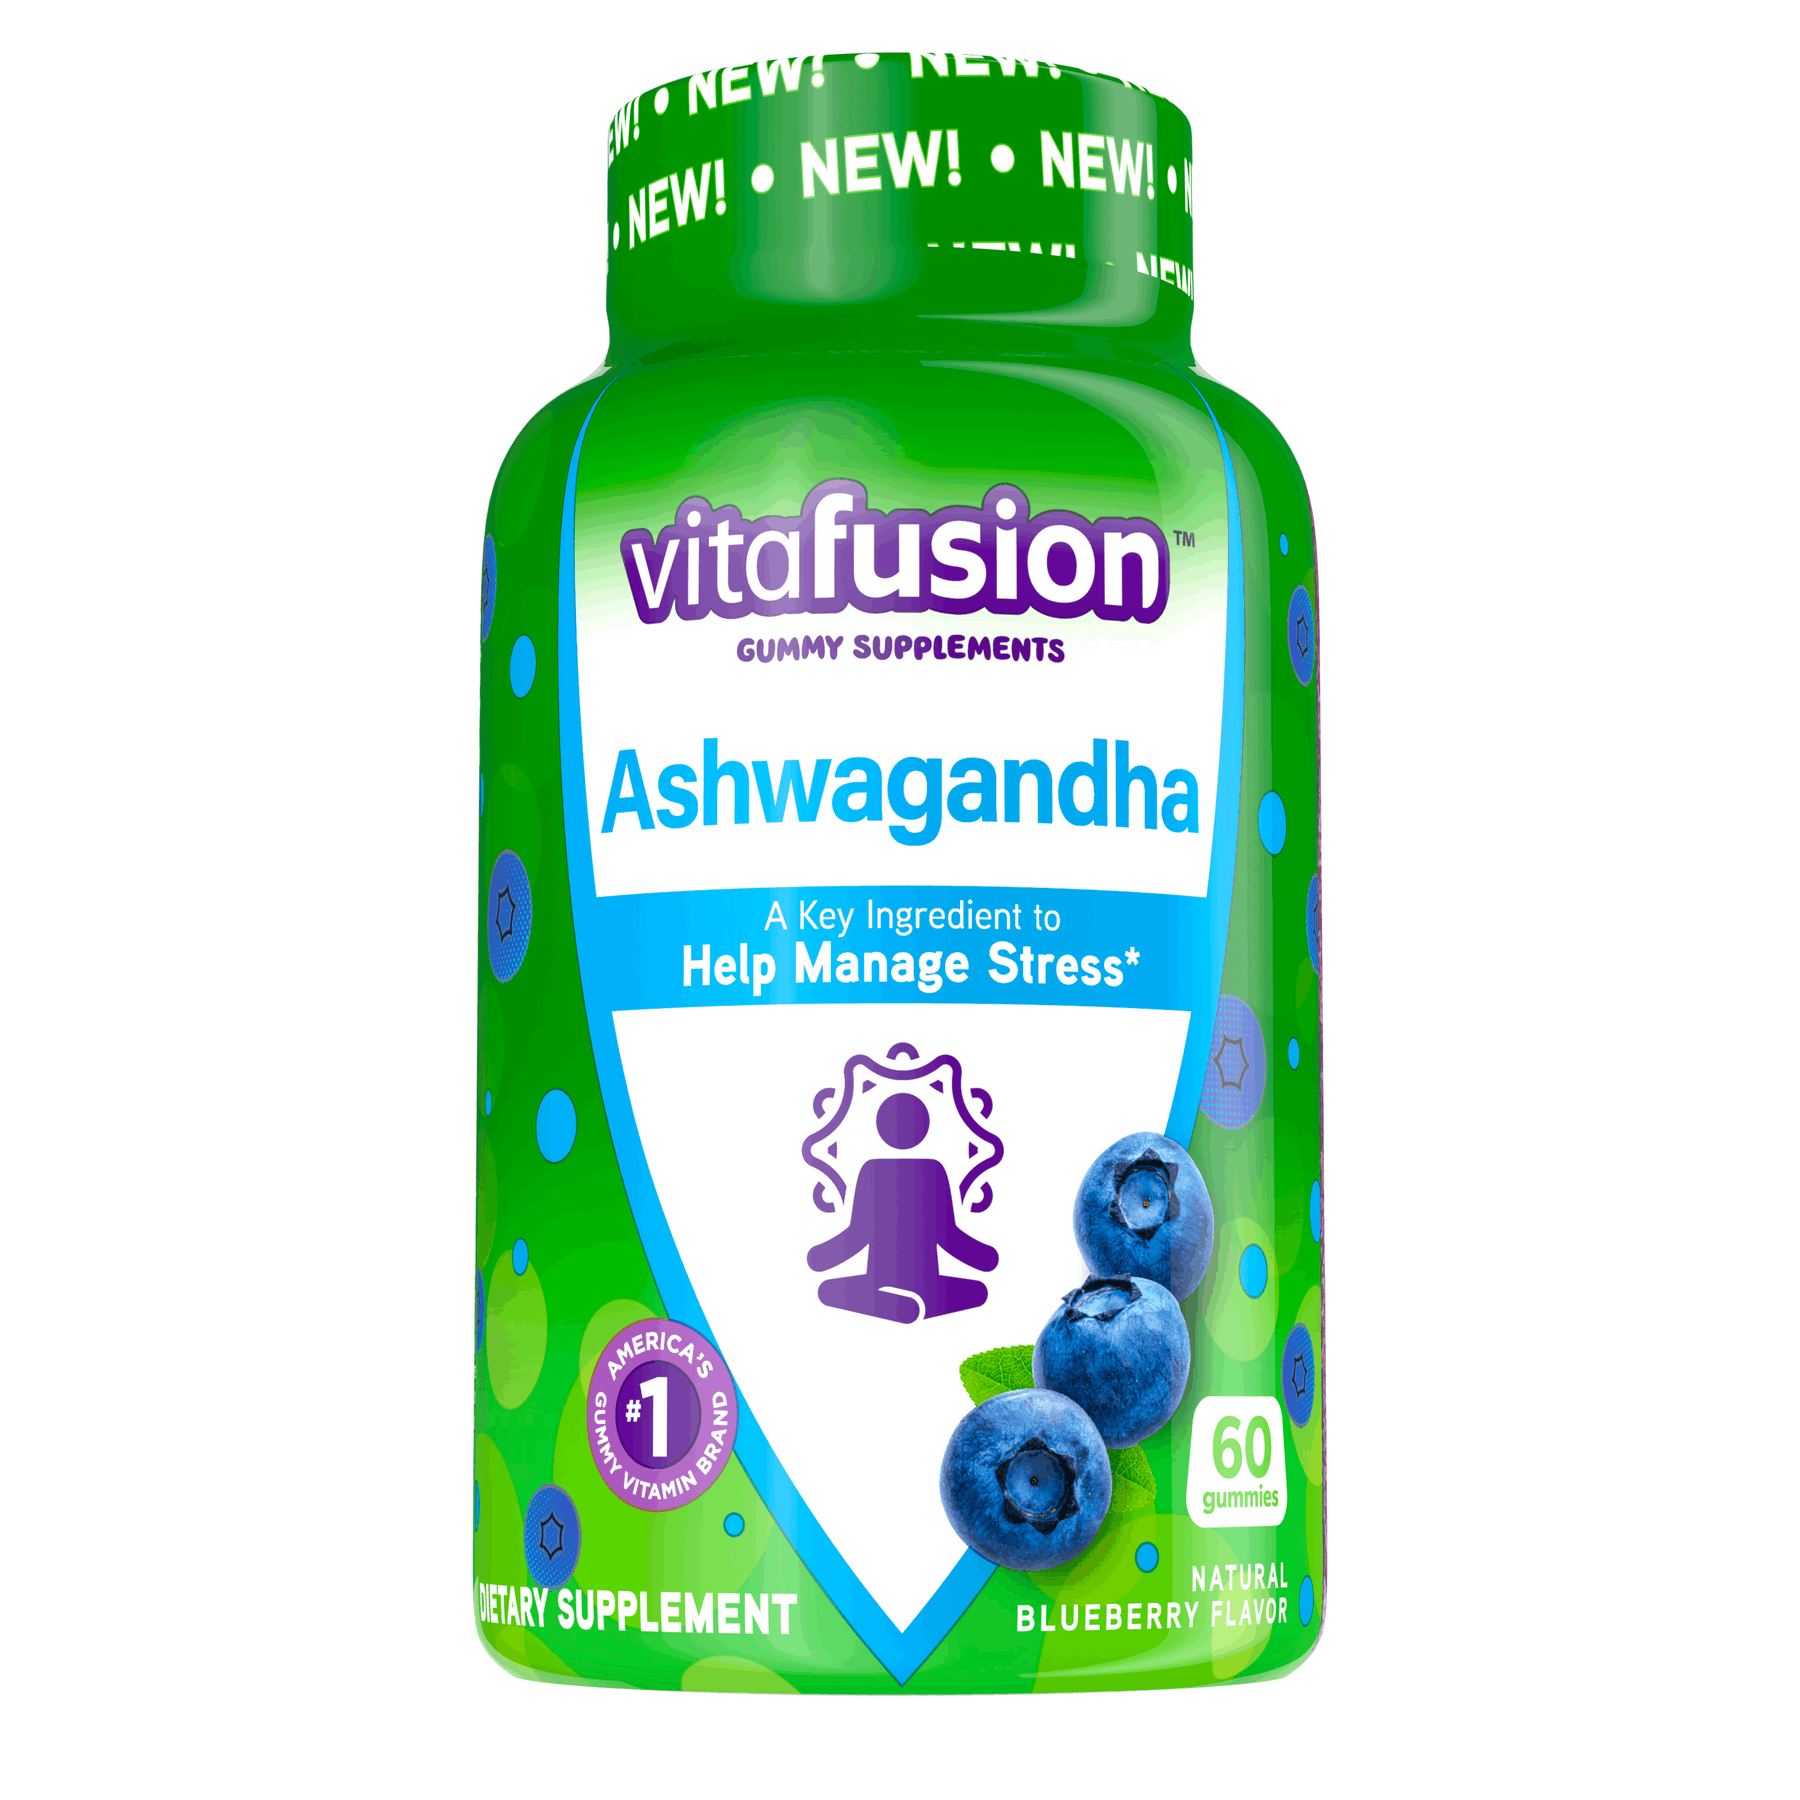 vitafusion™ Ashwagandha